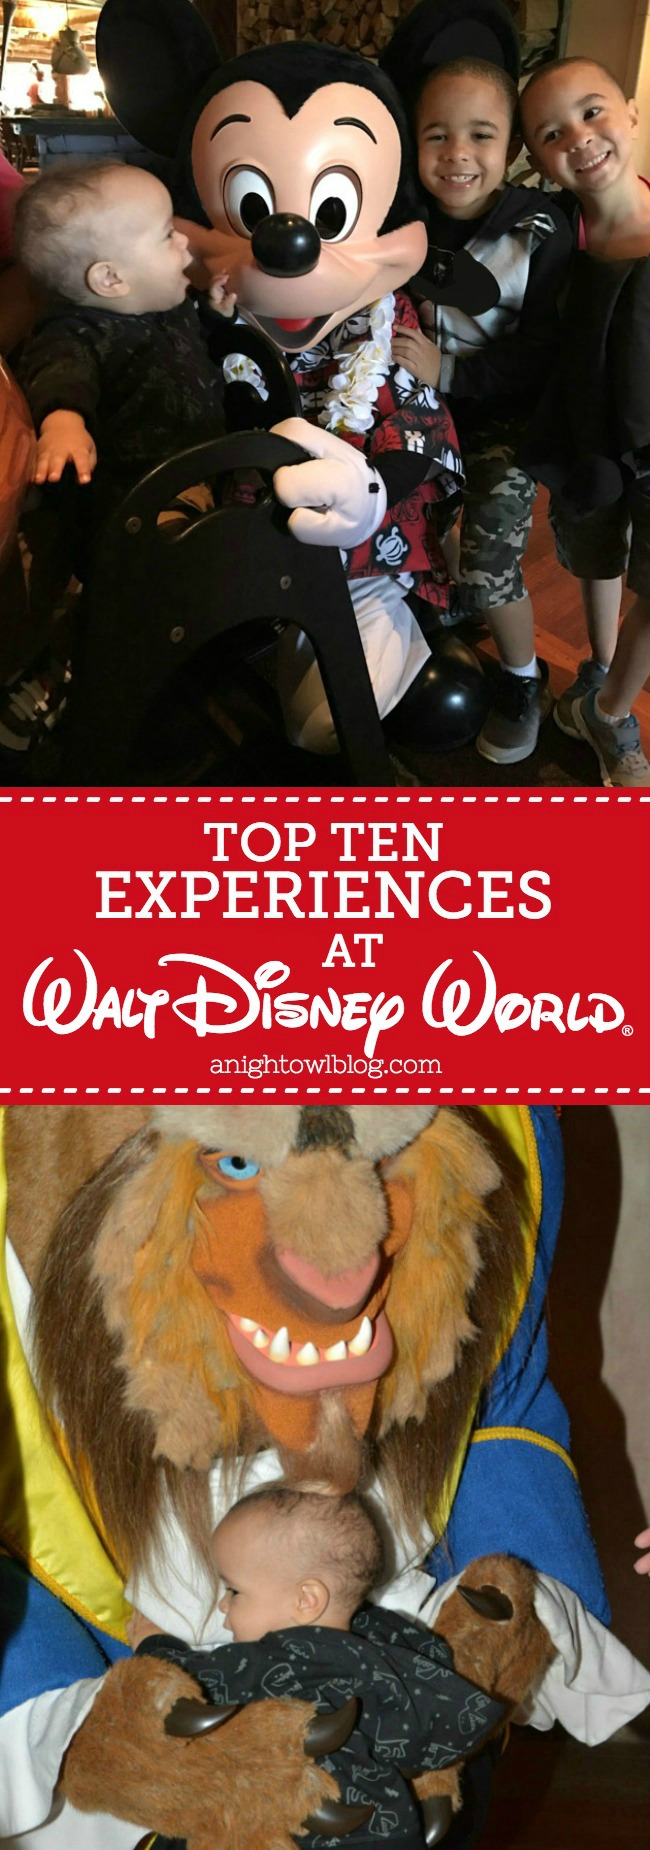 A fun list of Top Ten Experiences at Walt Disney World!